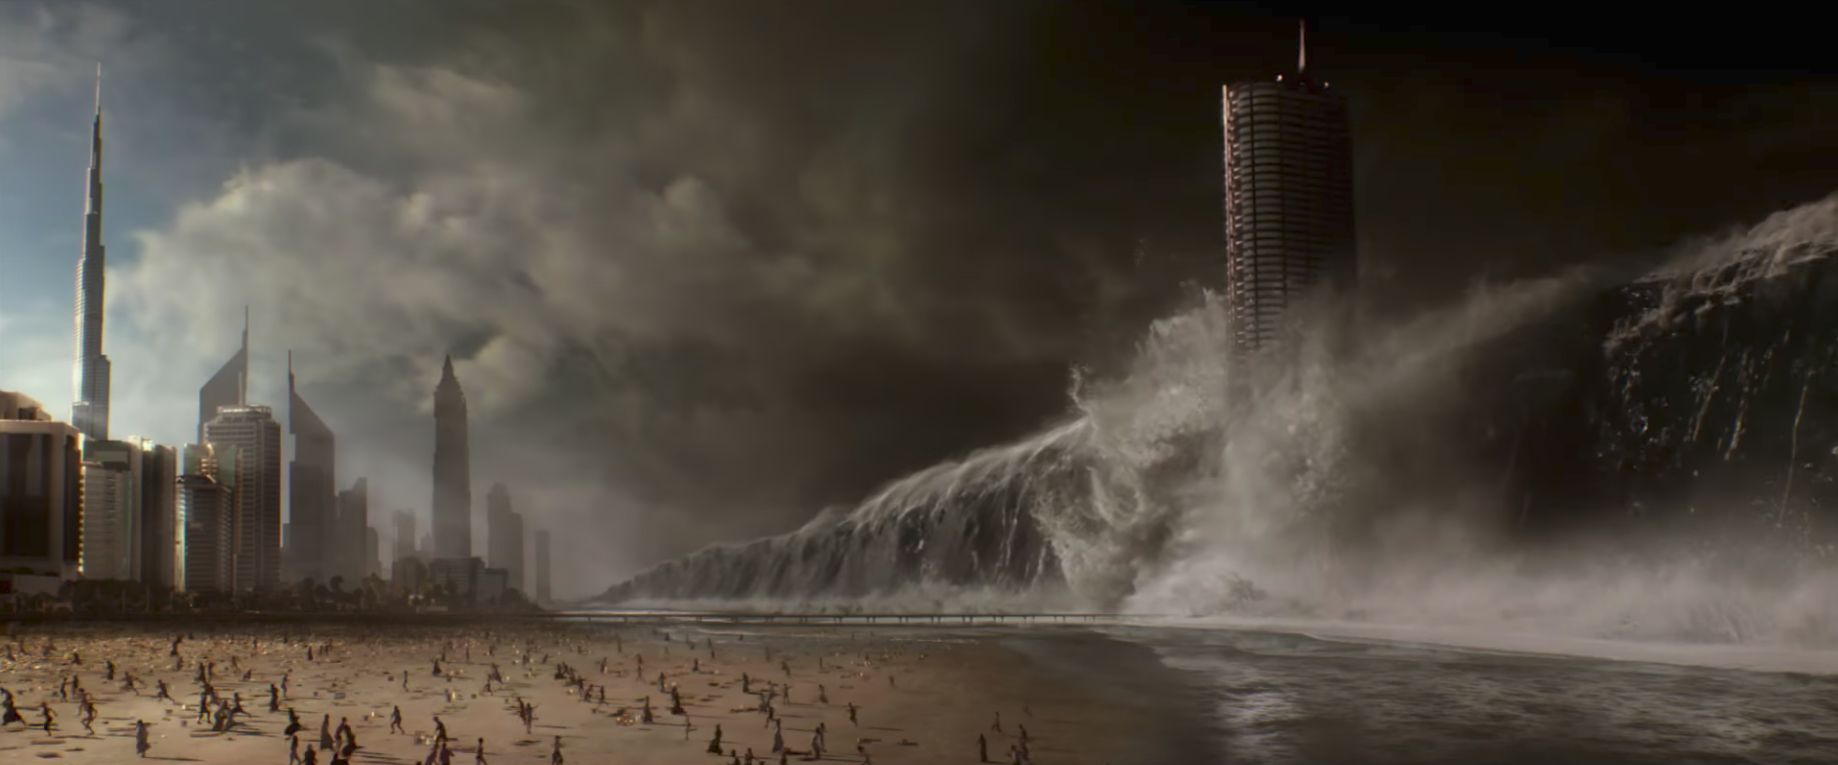 Geostorm trailer puts the fun in massive global catastrophe SciFiNow